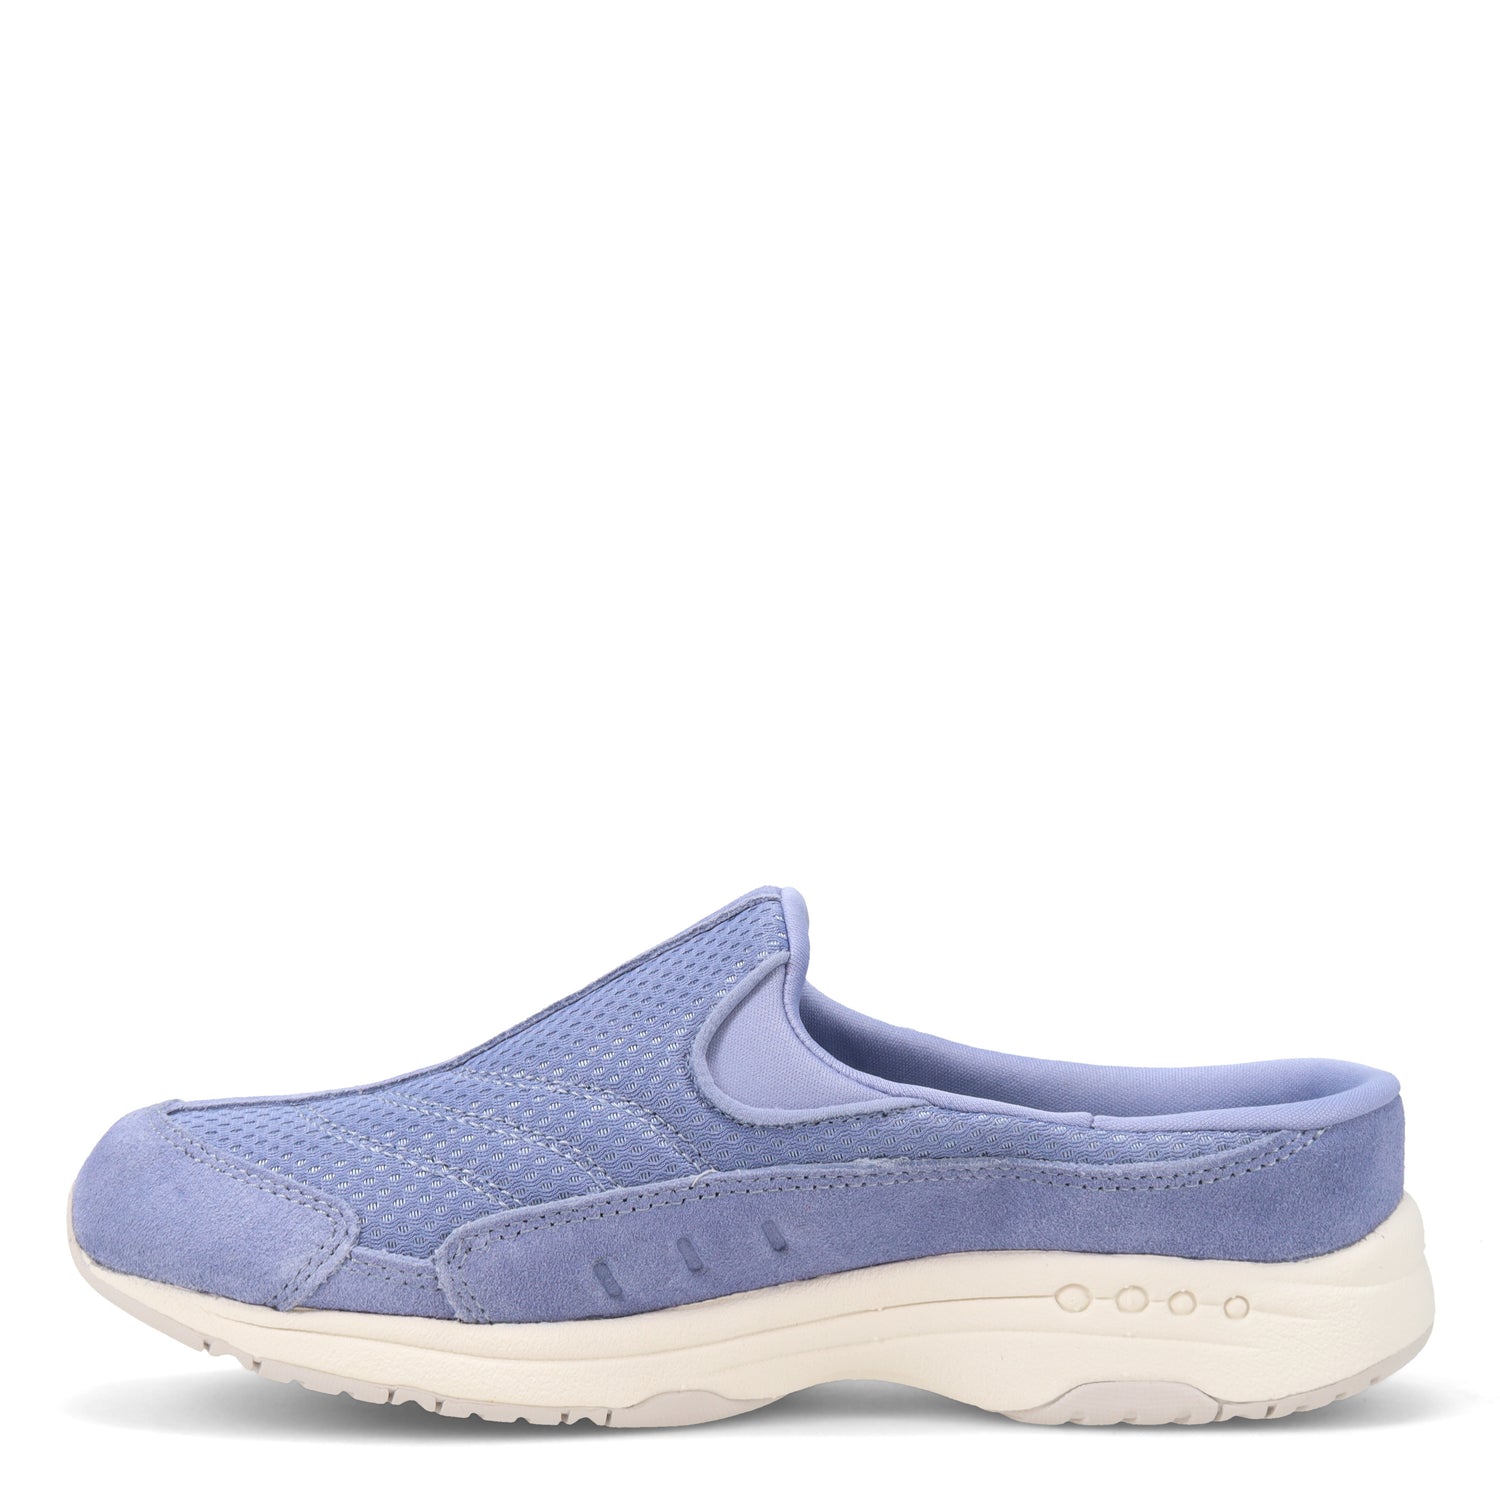 Peltz Shoes  Women's Easy Spirit Traveltime Classic Clog CORNFLOWER BLUE TTIME90-422